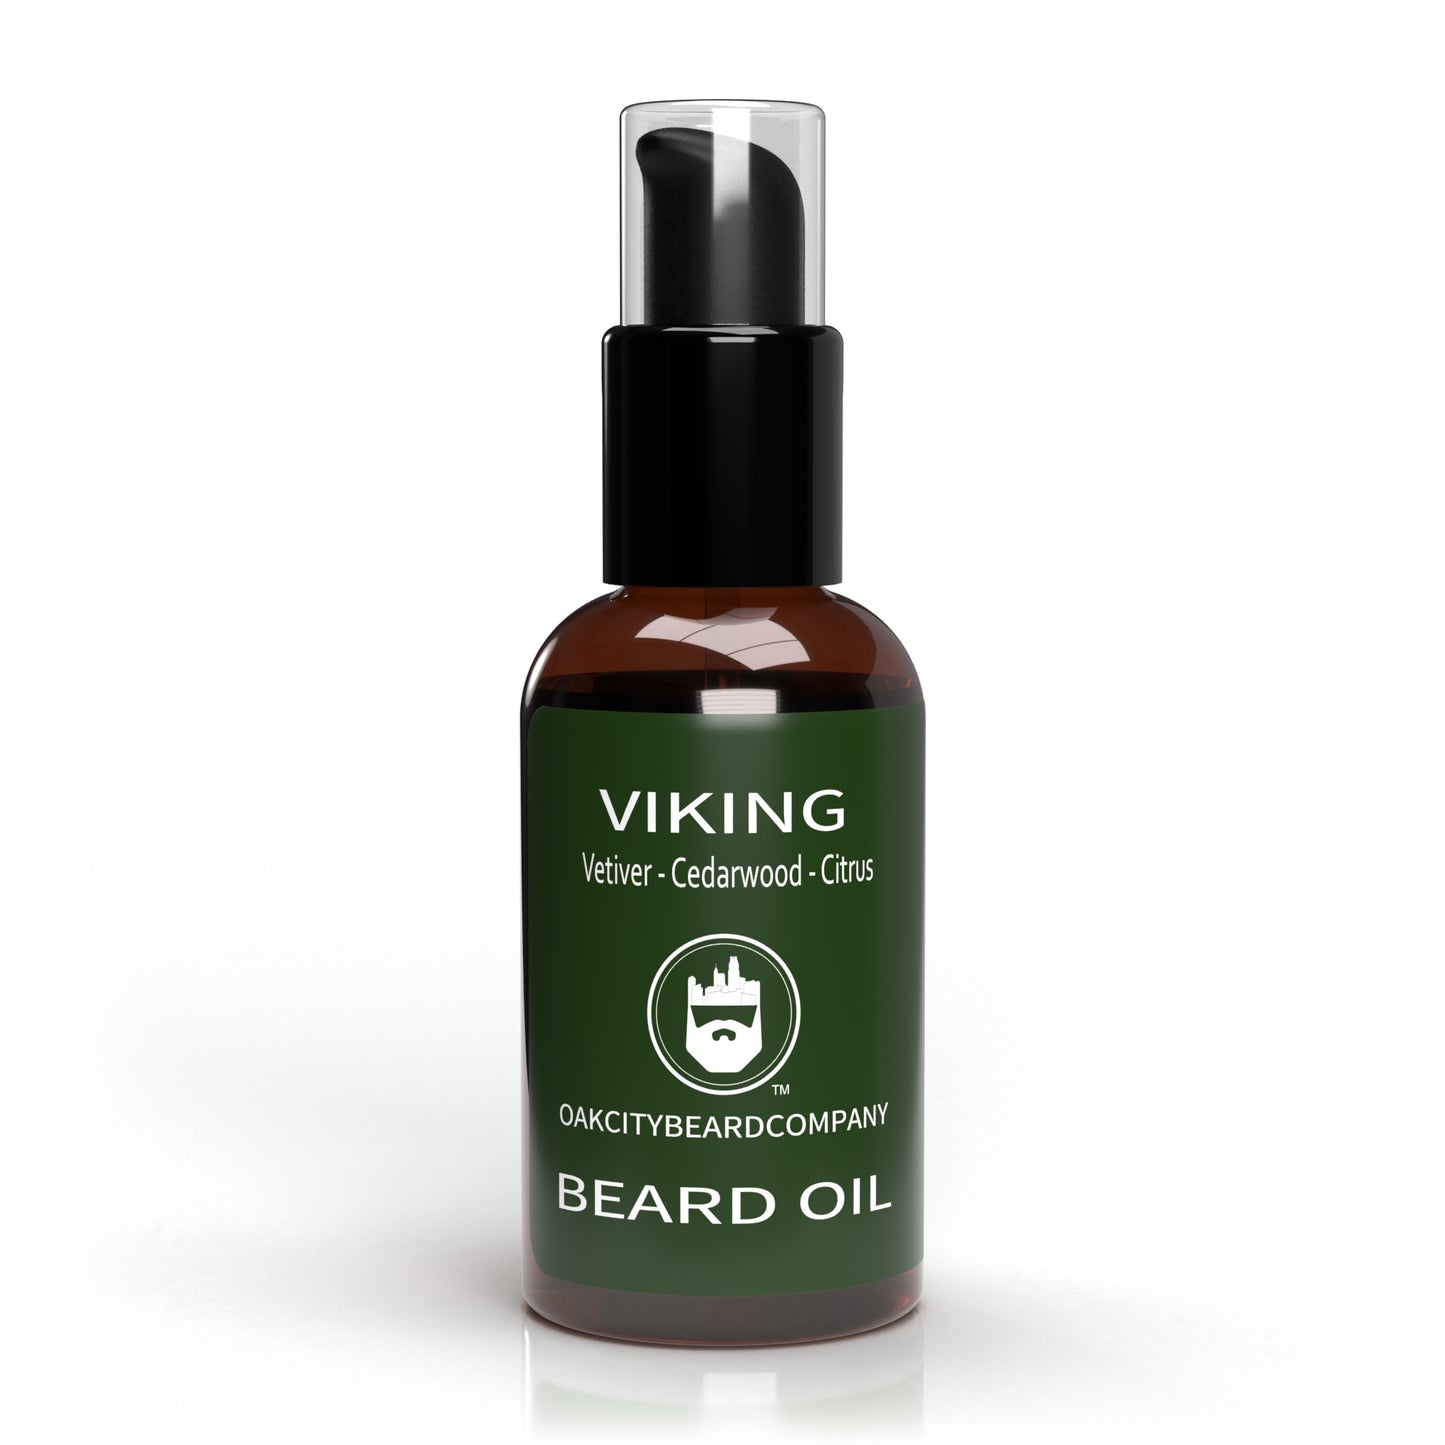 Viking (Beard Oil) by Oak City Beard Company